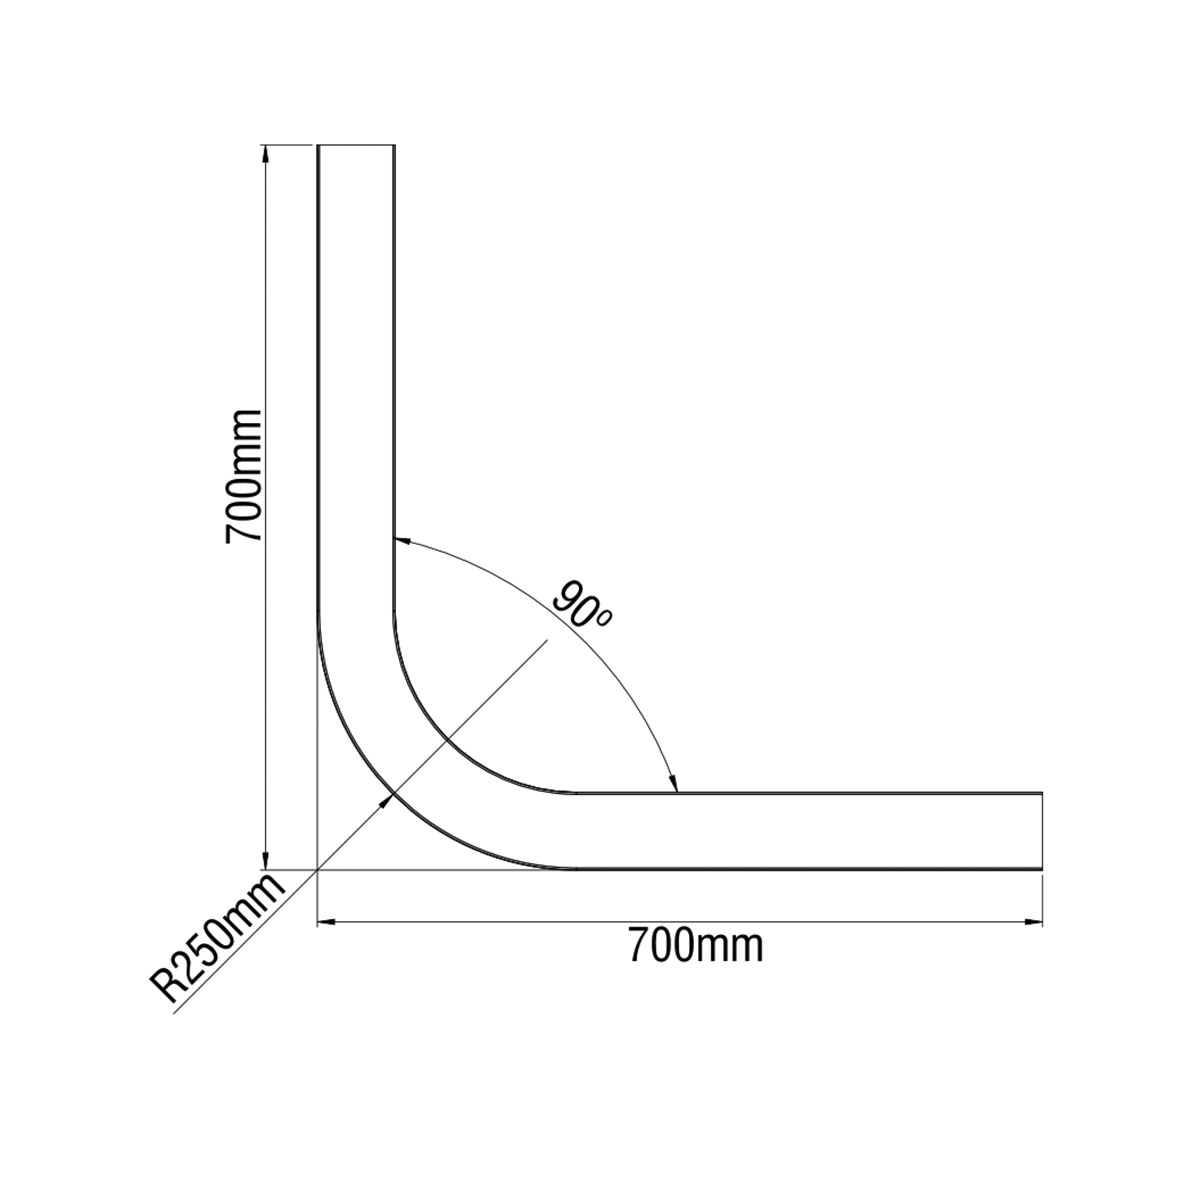  Dimensions / CYCLONE SLIM SYSTEM ANGLE R250 - 90